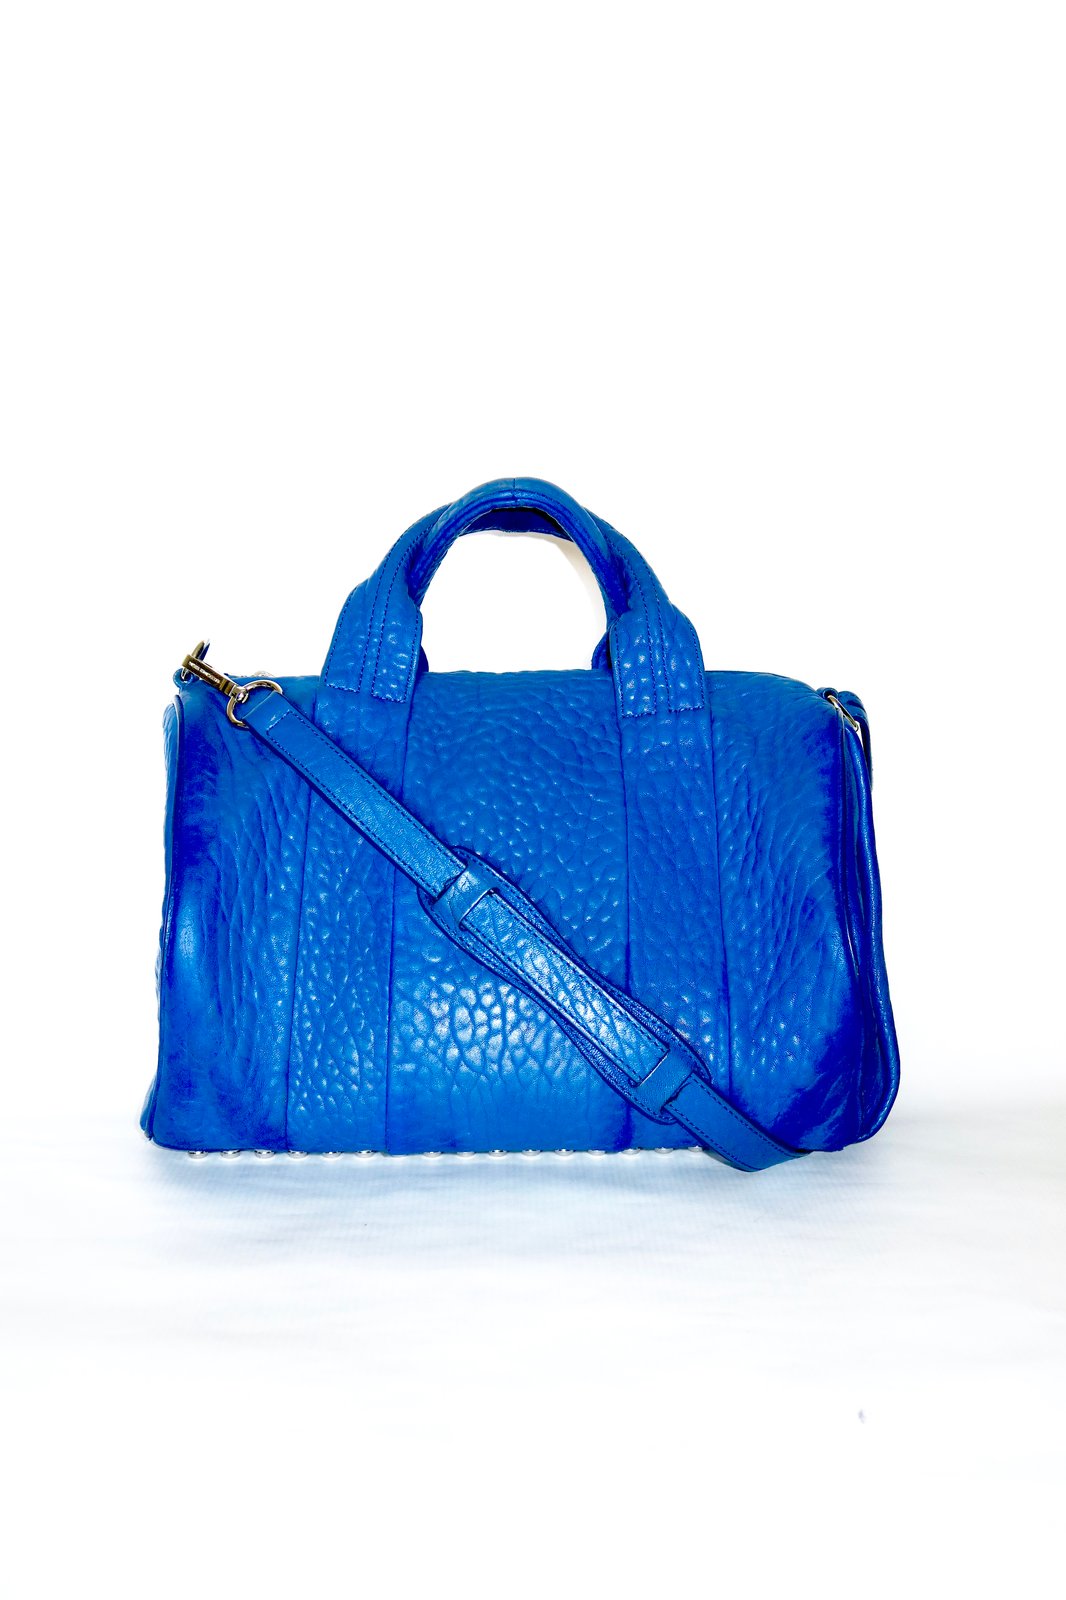 Kris-Ana Tote Bag with Mini Bag and Phone Purse in Cobalt